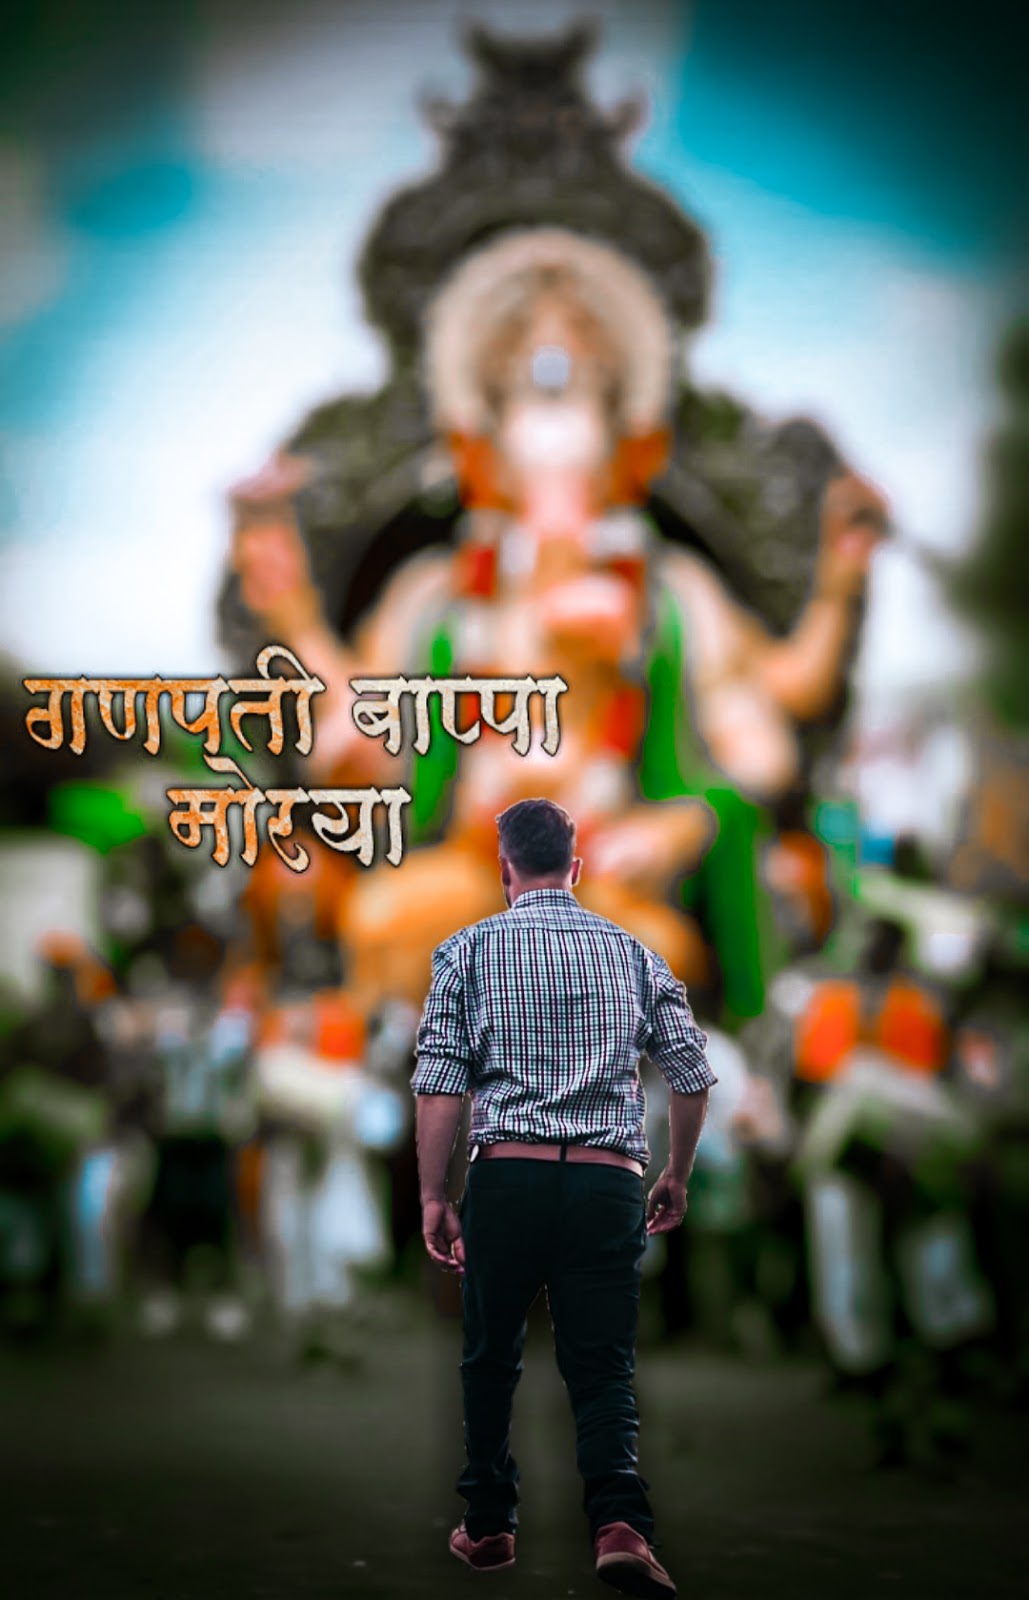 ganesh chaturthi picsart editing 2020 in hindi | ganpati editing photo | cb  edit ganpati | ganpati bappa photo editing background ~ Movie Kaise Dekhe,  Movie Review